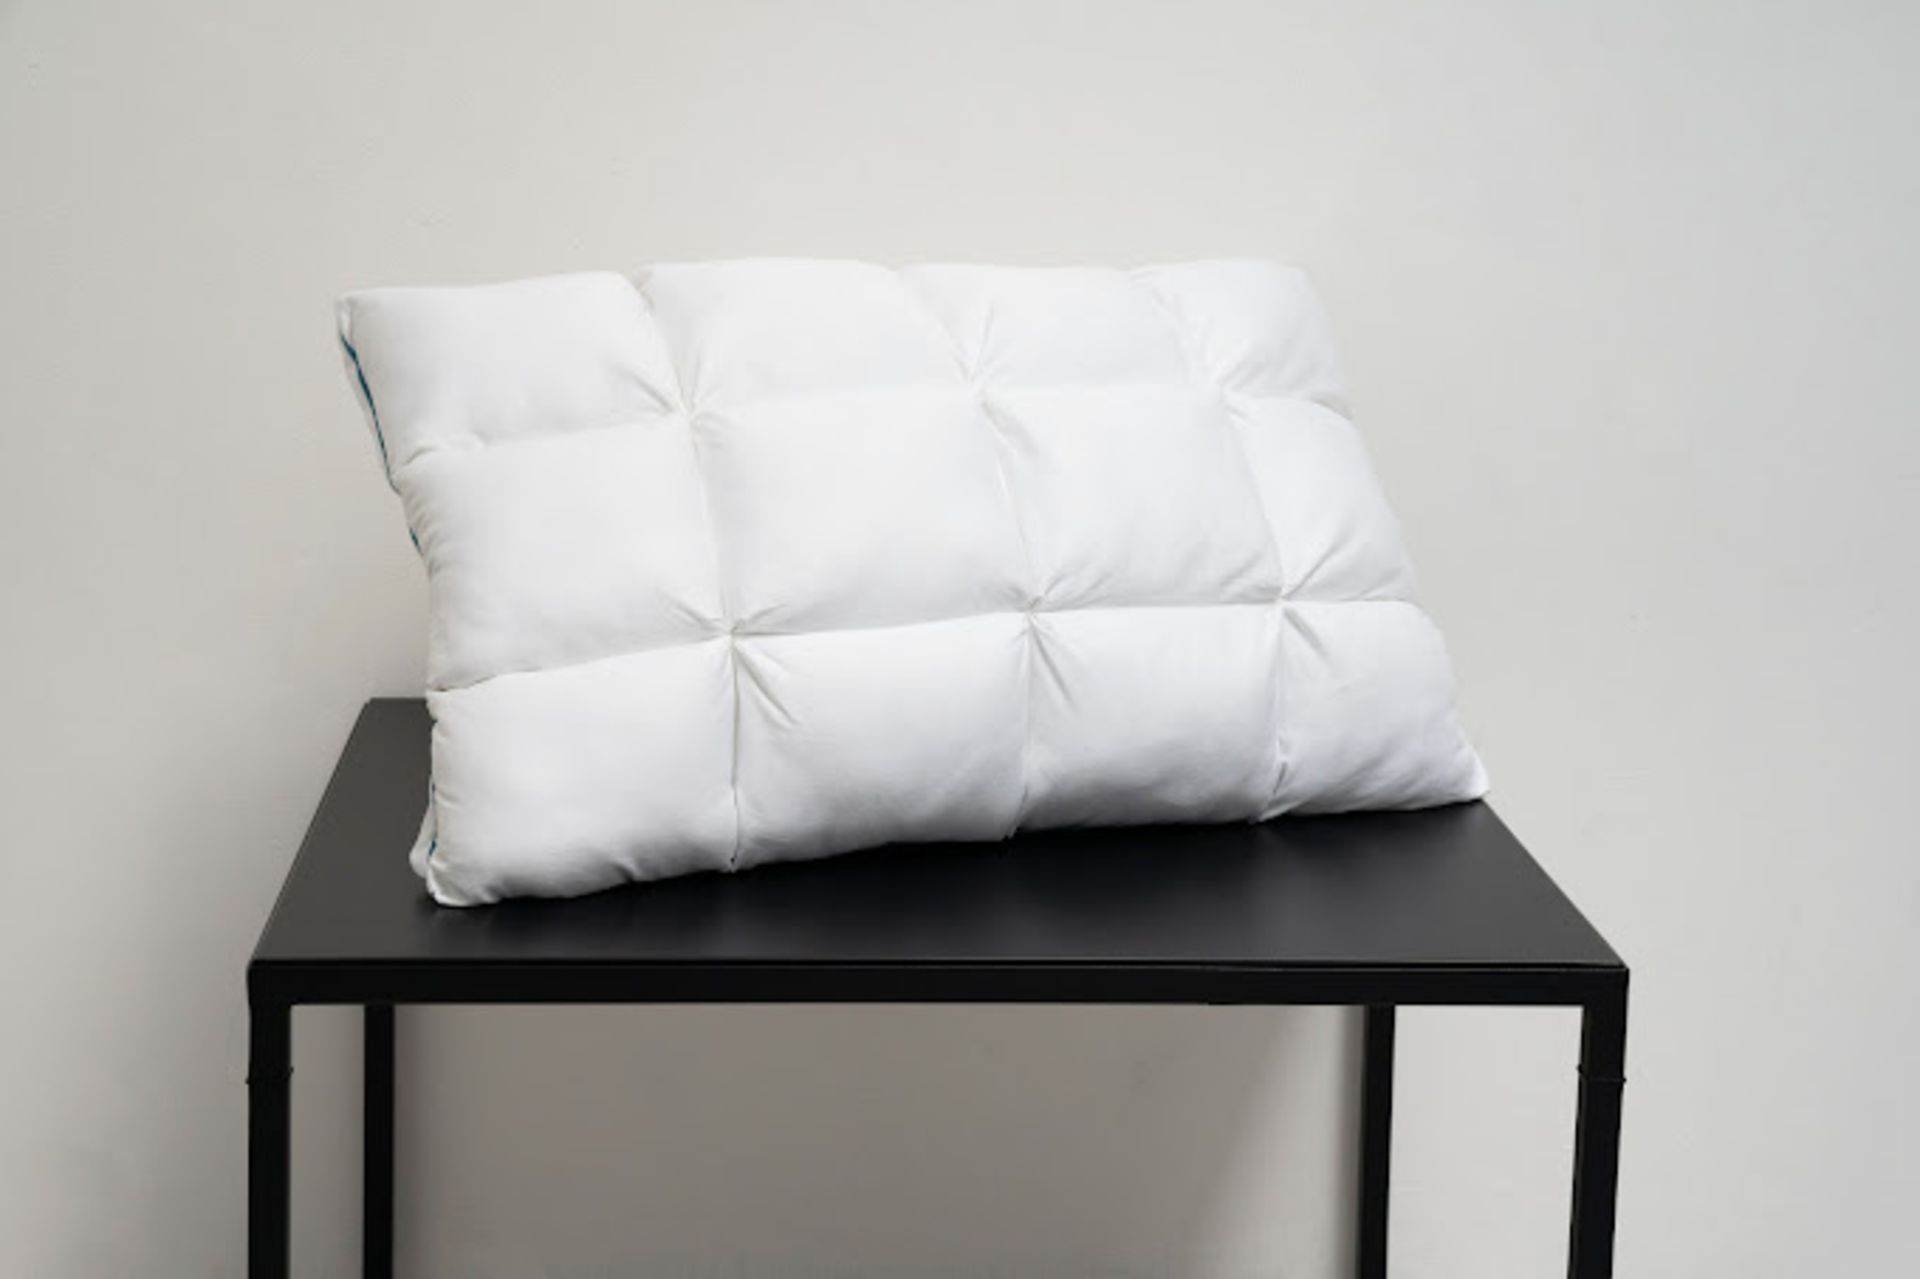 2 x ComfaSleep PL0001 Pillows - Image 5 of 18